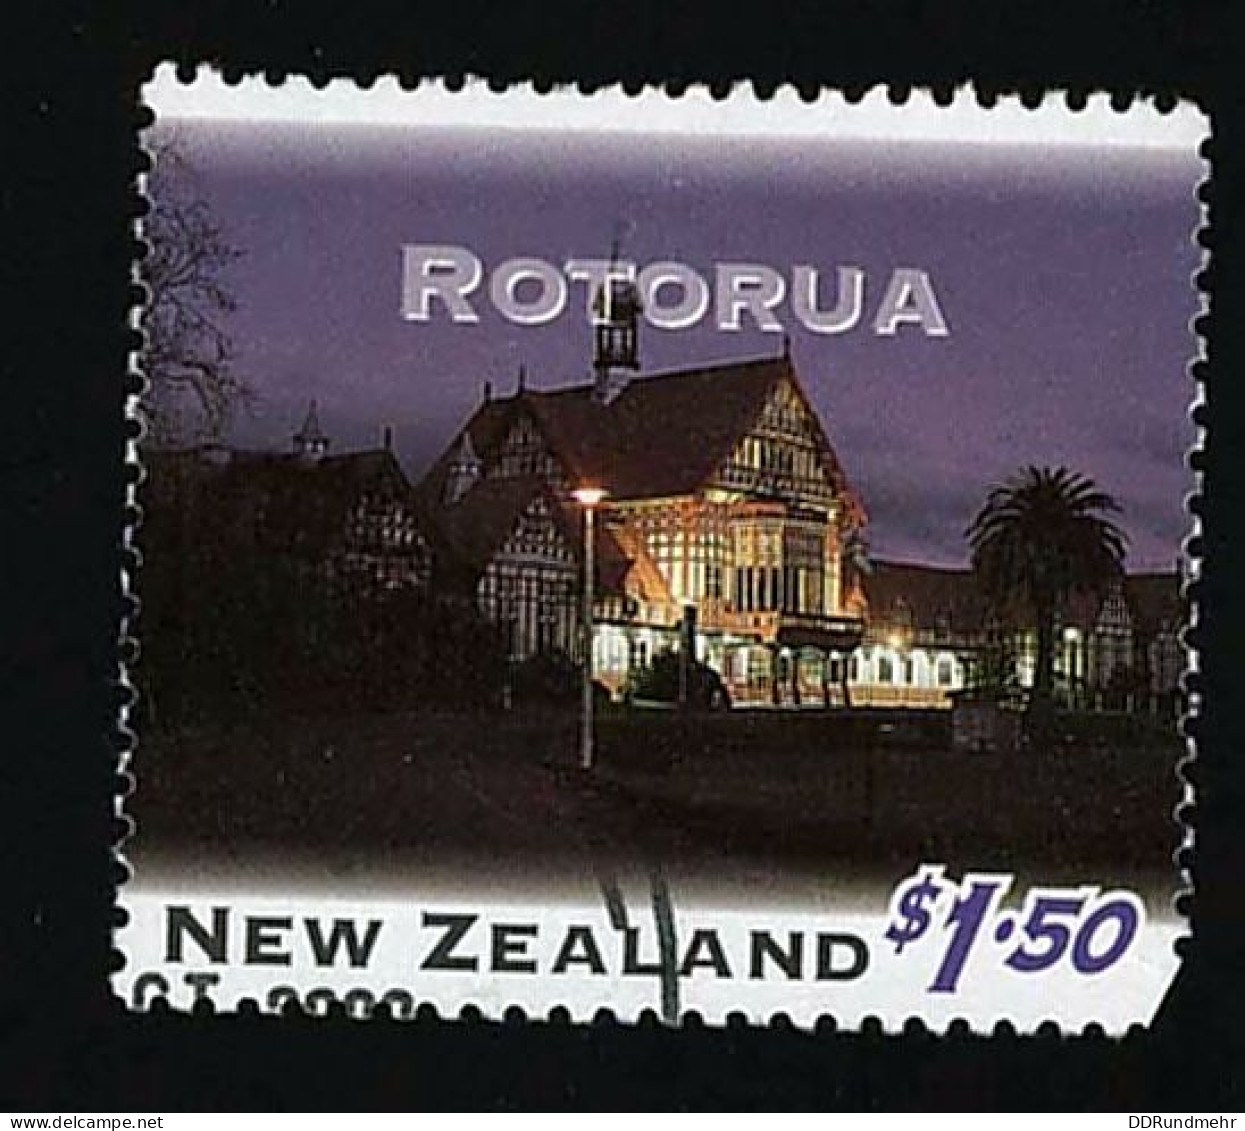 1995 Rotorua Michel NZ 1403 Stamp Number NZ 1253 Yvert Et Tellier NZ 1346 Stanley Gibbons NZ 1859 - Gebruikt